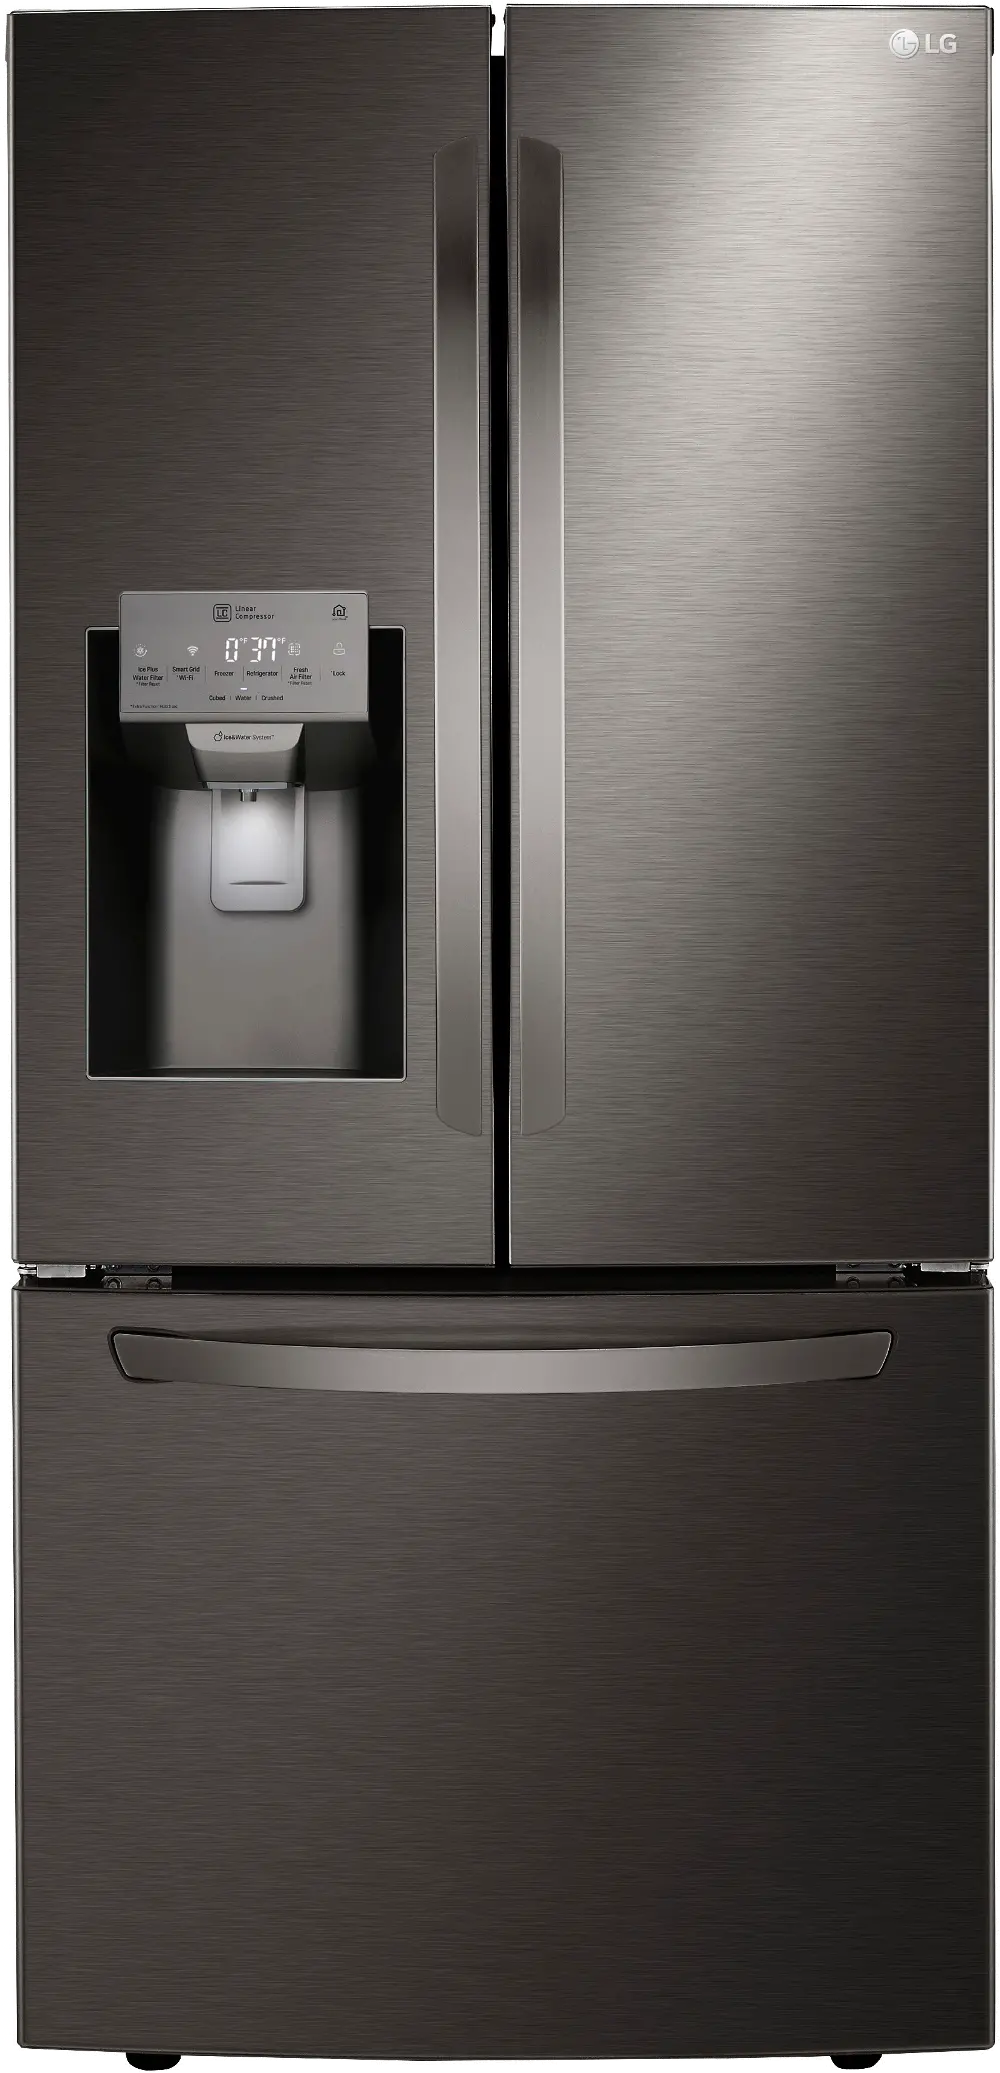 LRFXS2503D LG 24.5 cu ft French Door Refrigerator - 33 W Black Stainless Steel-1